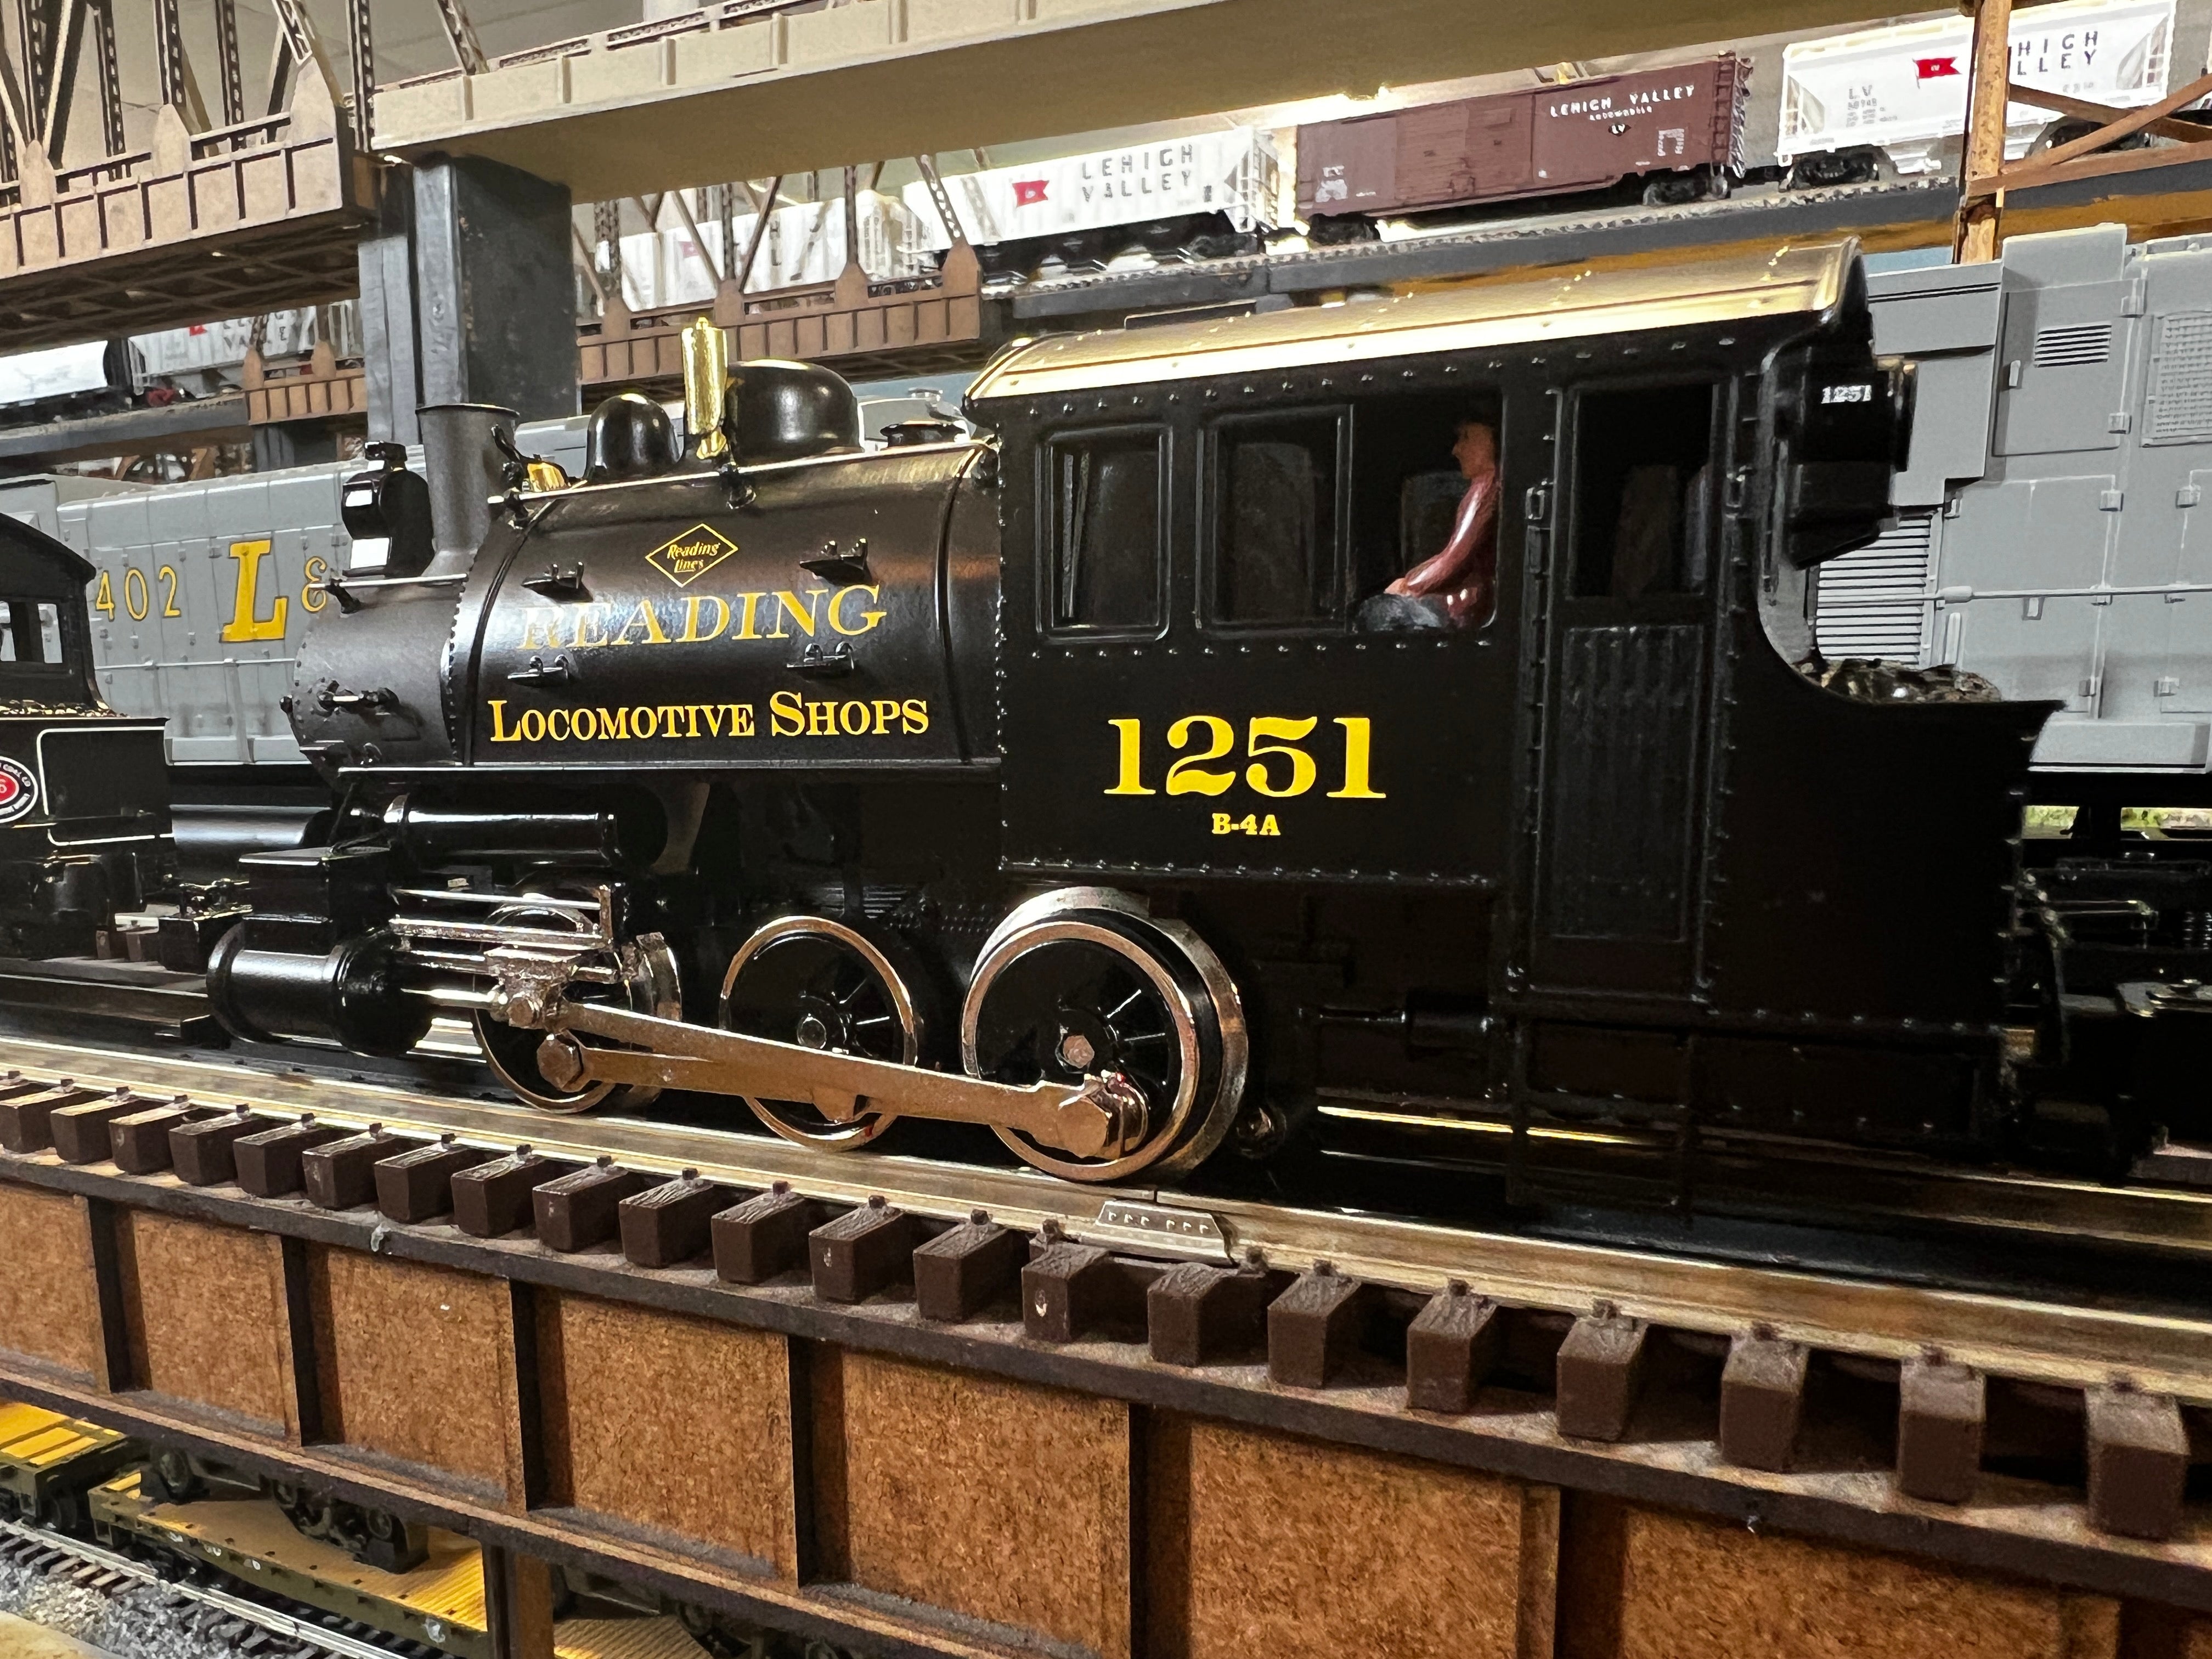 Lionel 2332010 - LionChief+ 2.0 0-6-0T Steam Locomotive "Reading" #1251